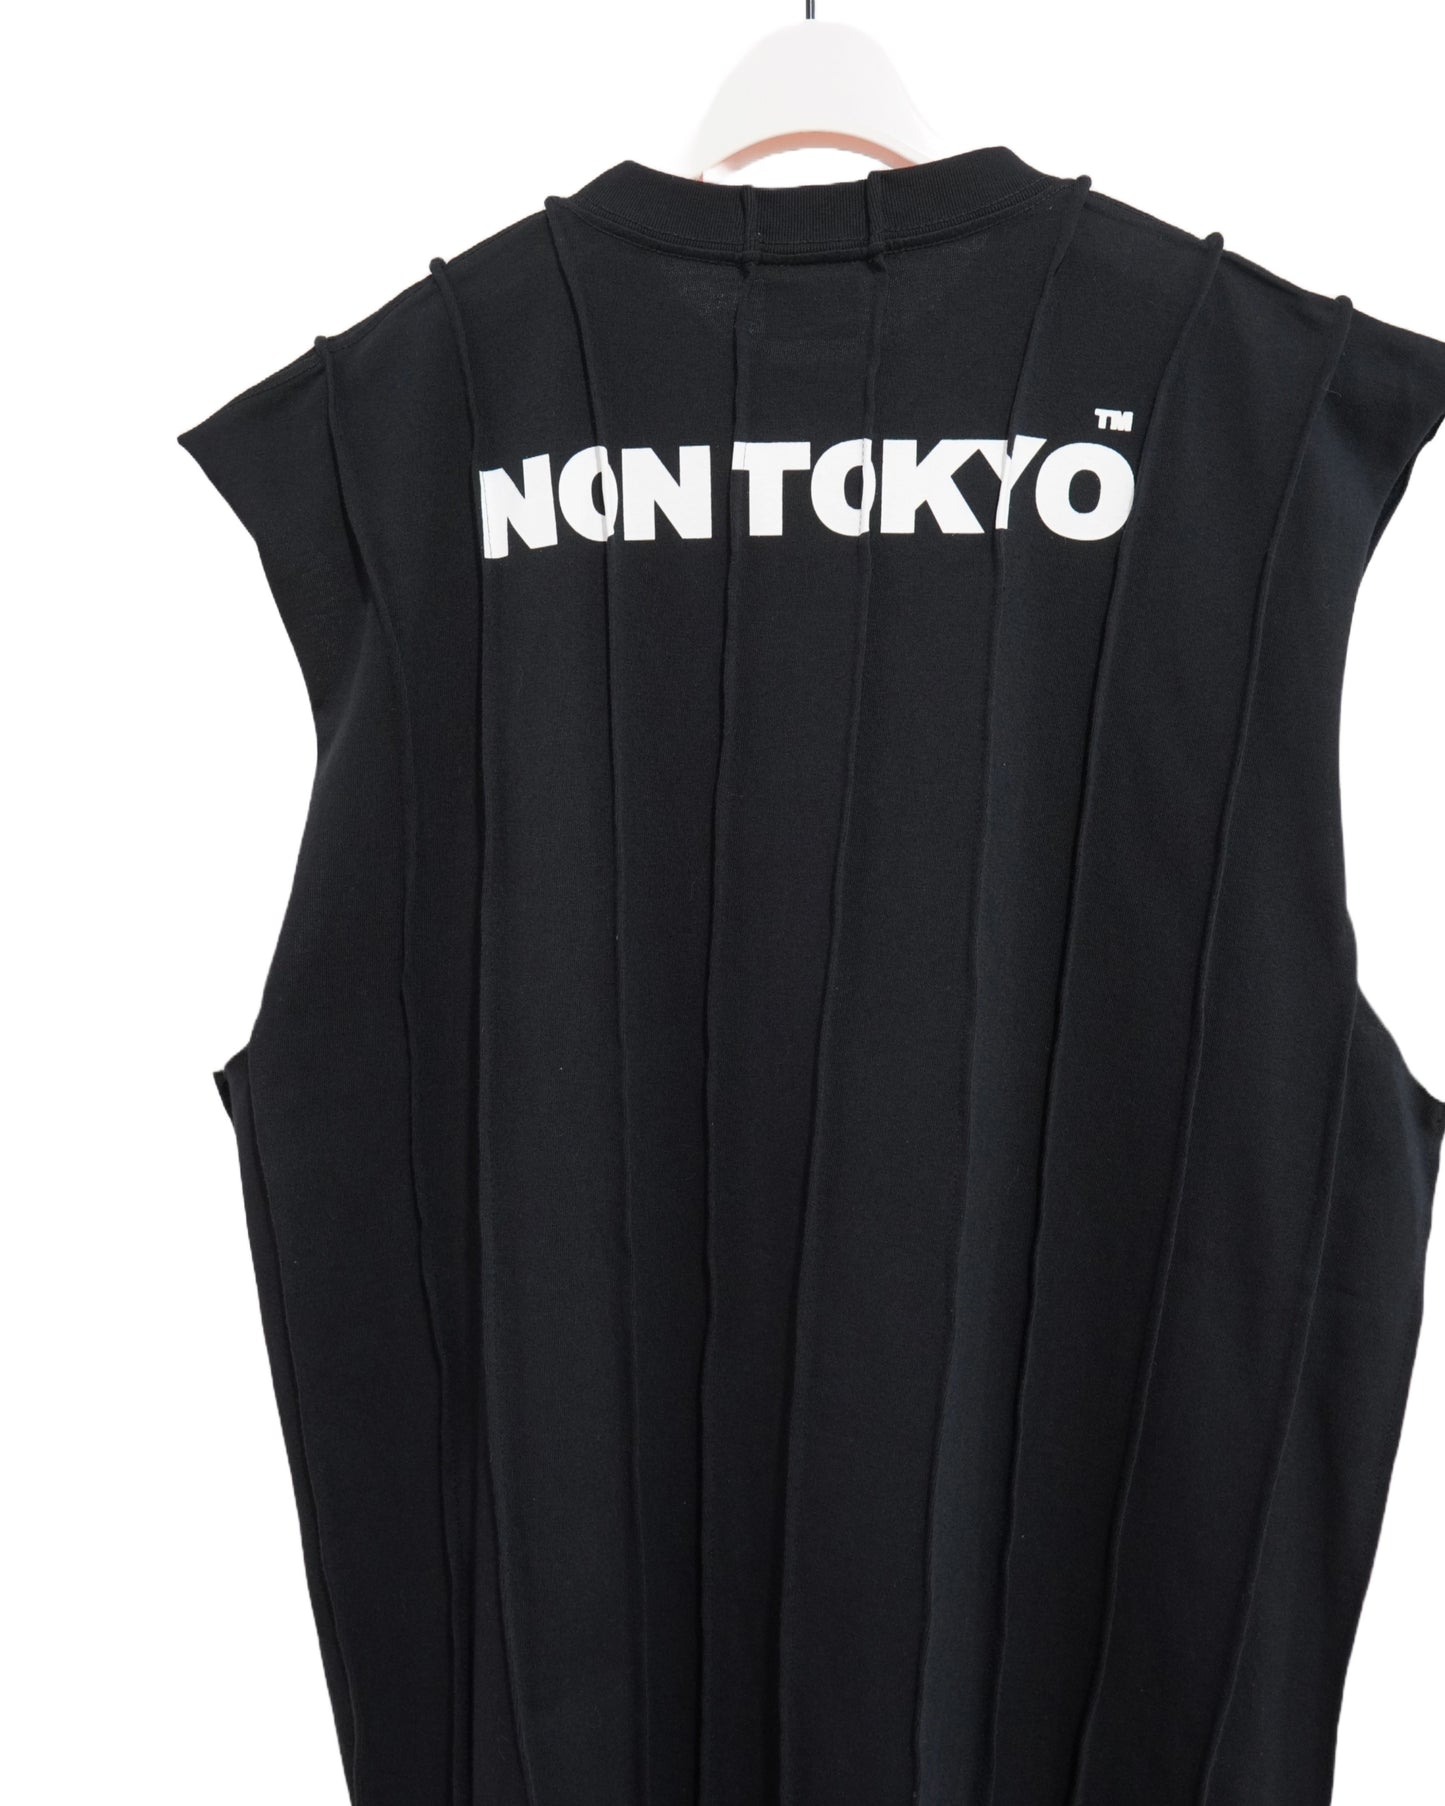 NON TOKYO /  PIN TUCK C/S (SIGNBOARD / BLACK) / 〈ノントーキョー〉ピンタックカットソー (看板 / ブラック)